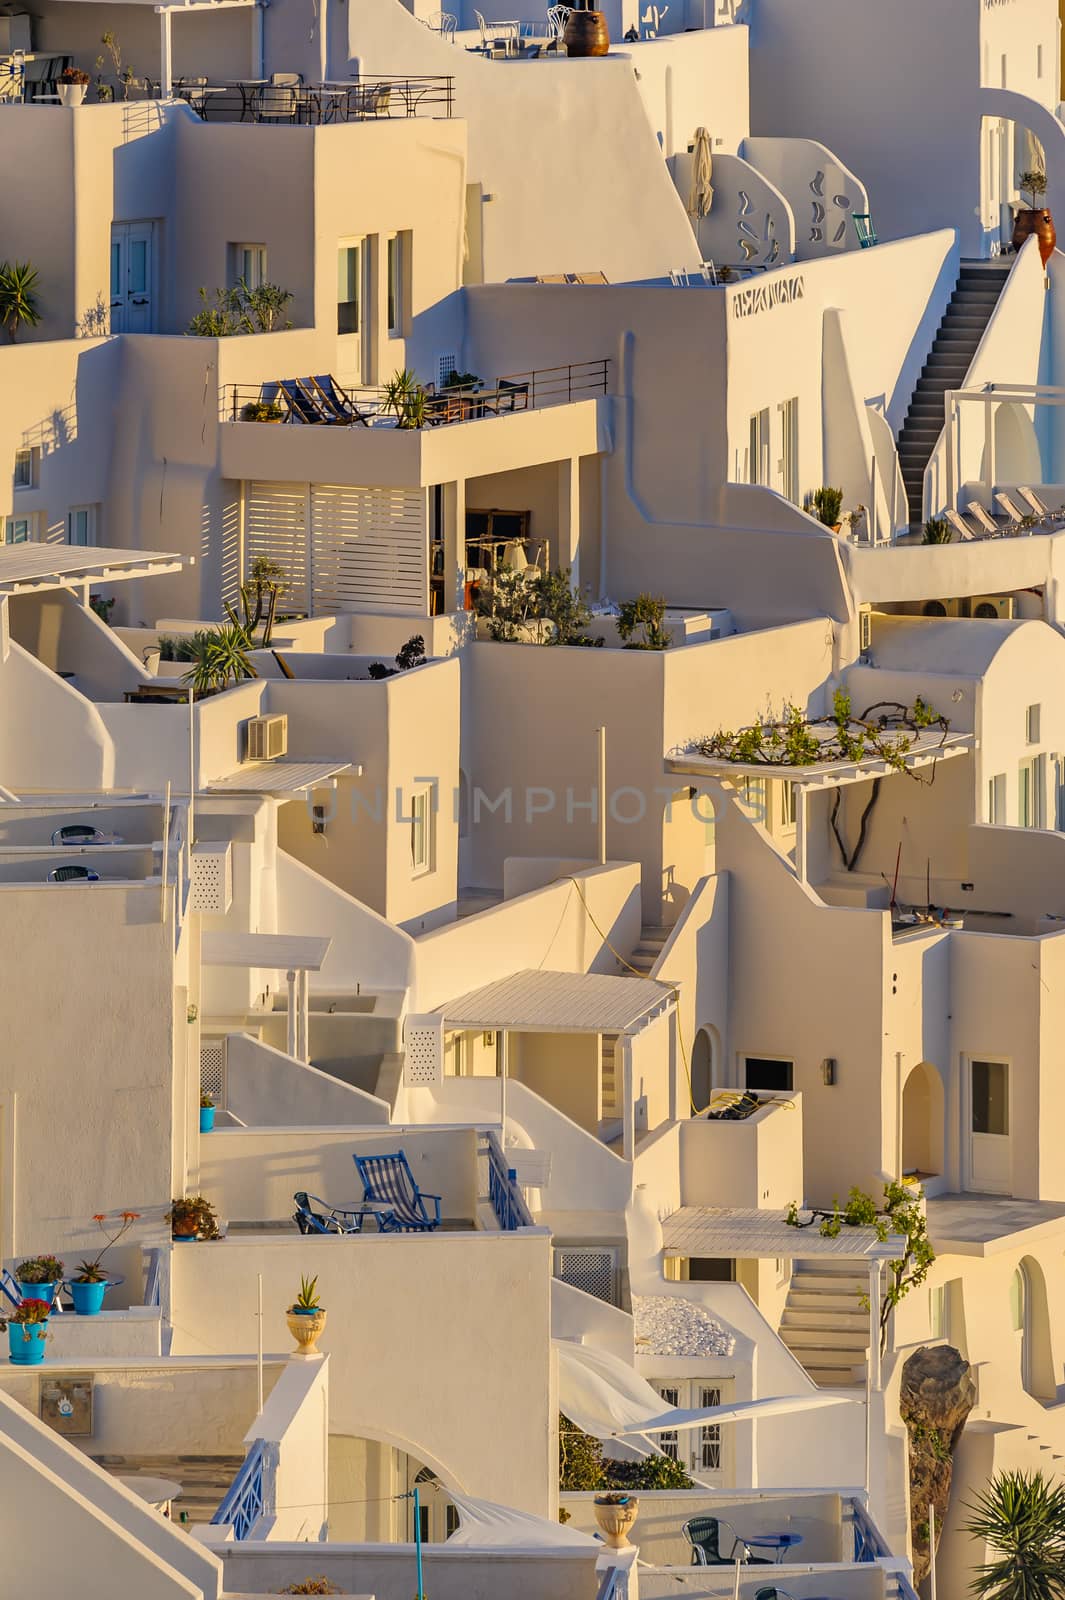 Fira village street view at Santorini island, Greece by starush